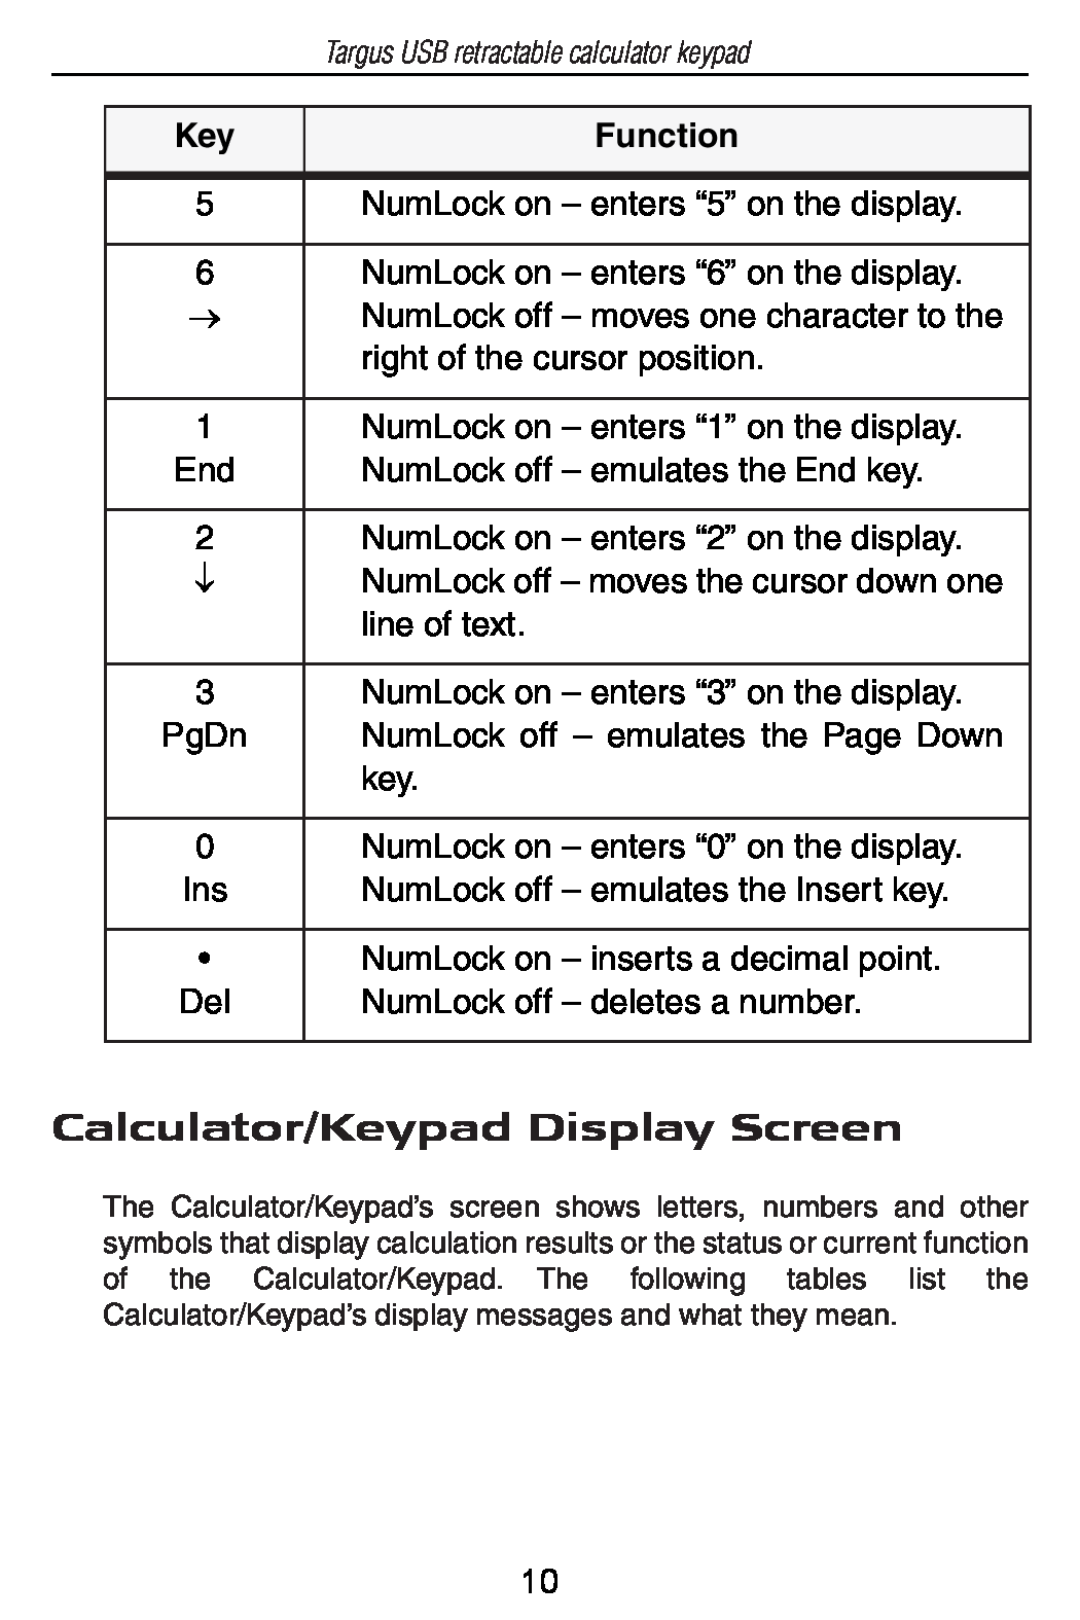 Targus USB Retractable Calculator Keypad specifications Calculator/Keypad Display Screen, Function 